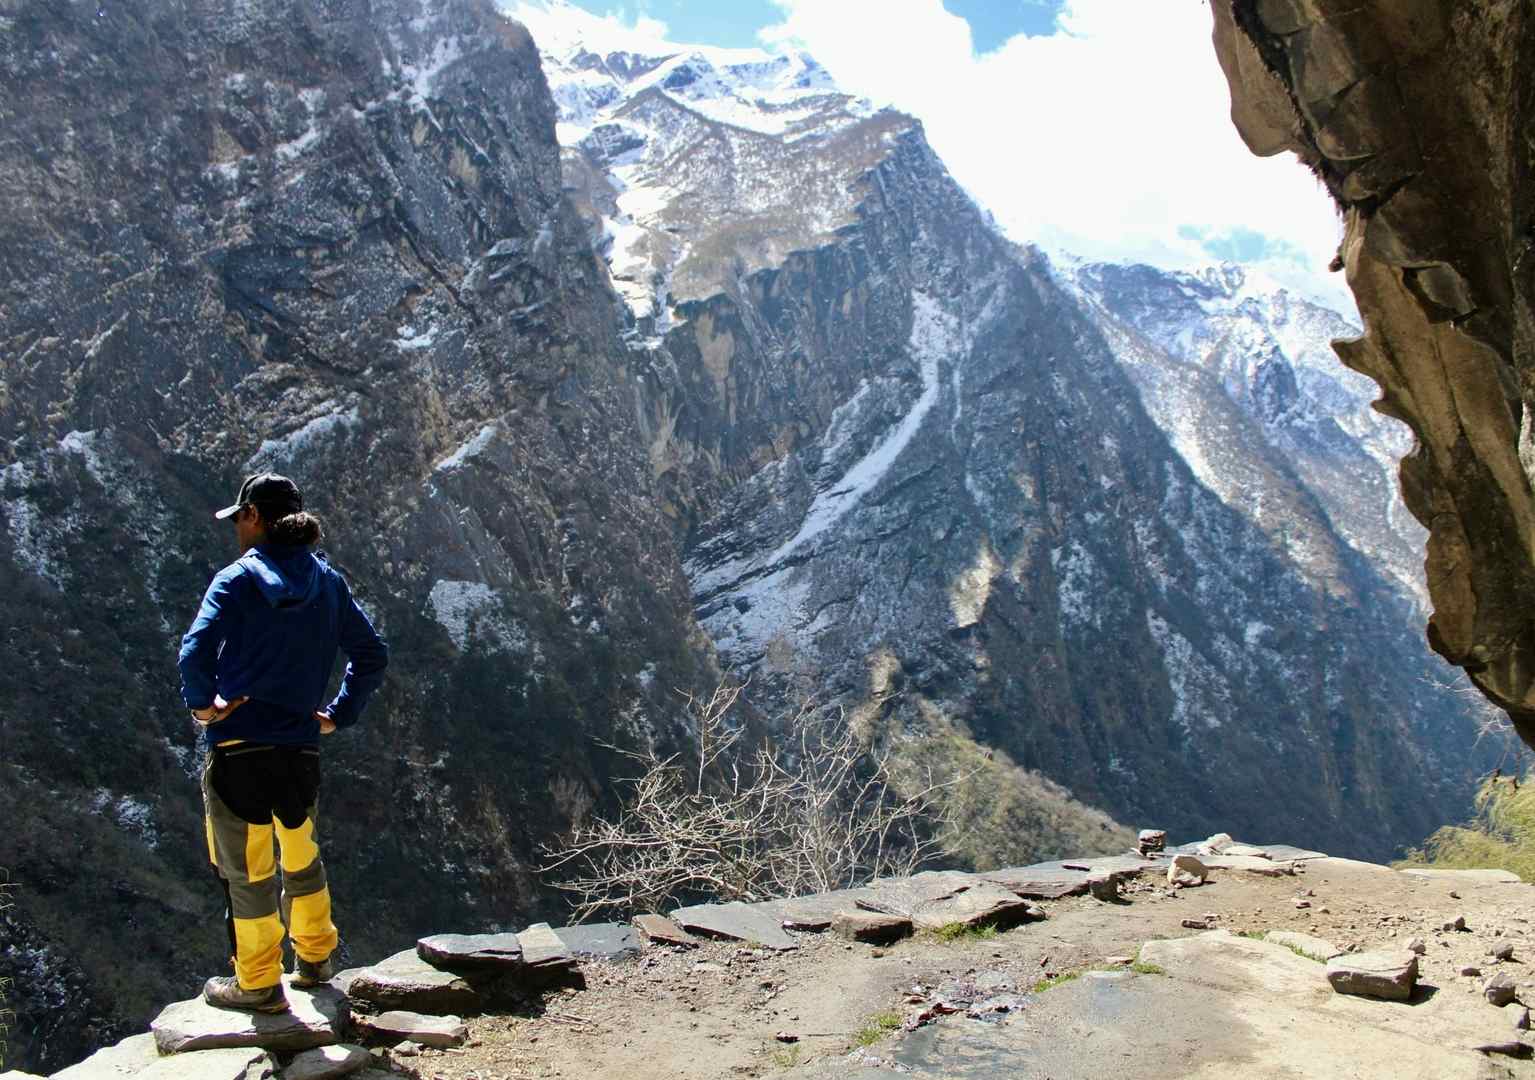 Trekking the Annapurna Sanctuary route was...